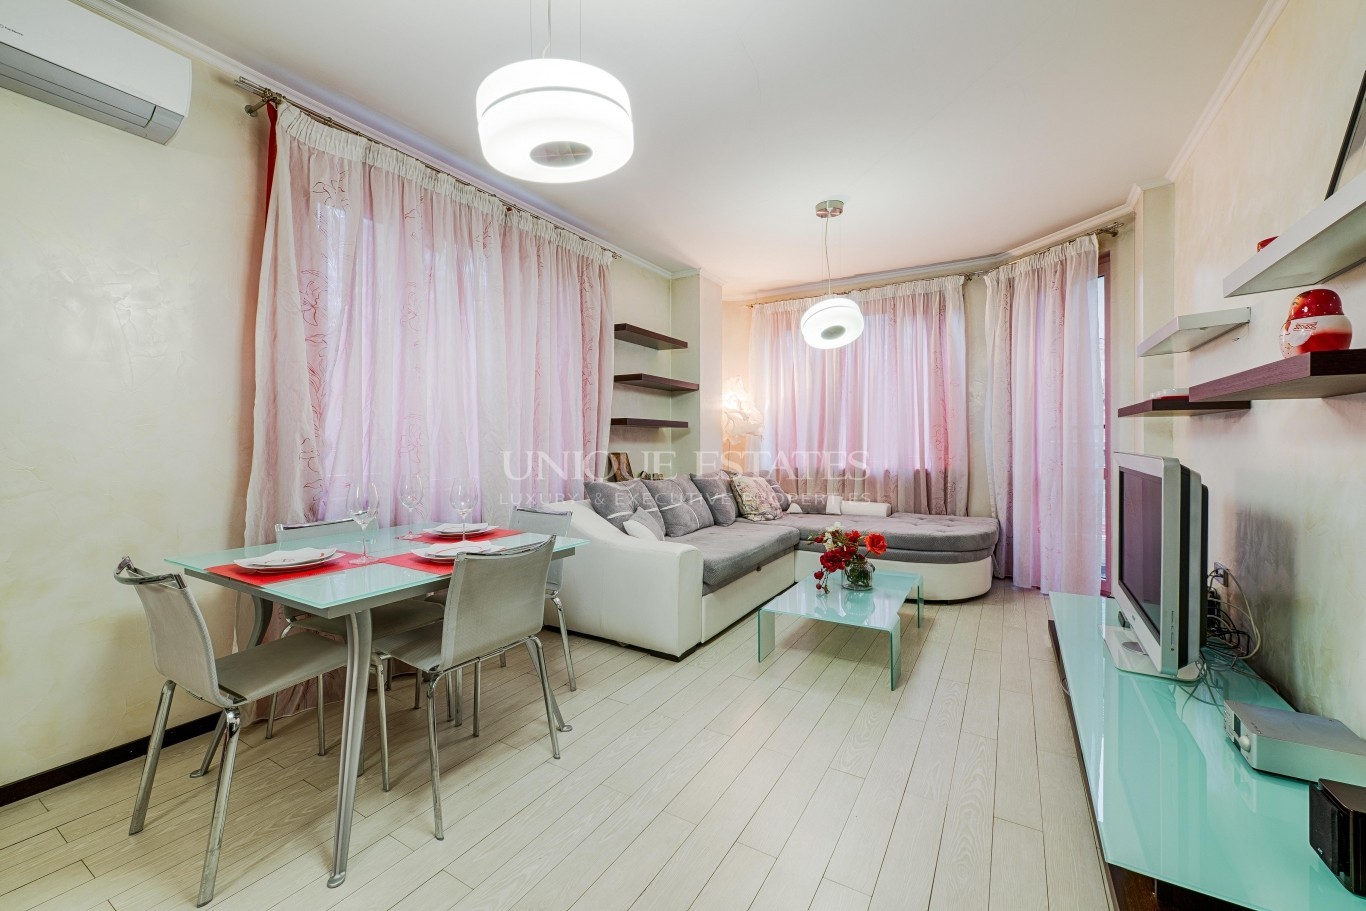 Апартамент под наем в София, Лозенец - код на имота: K8709 - image 1